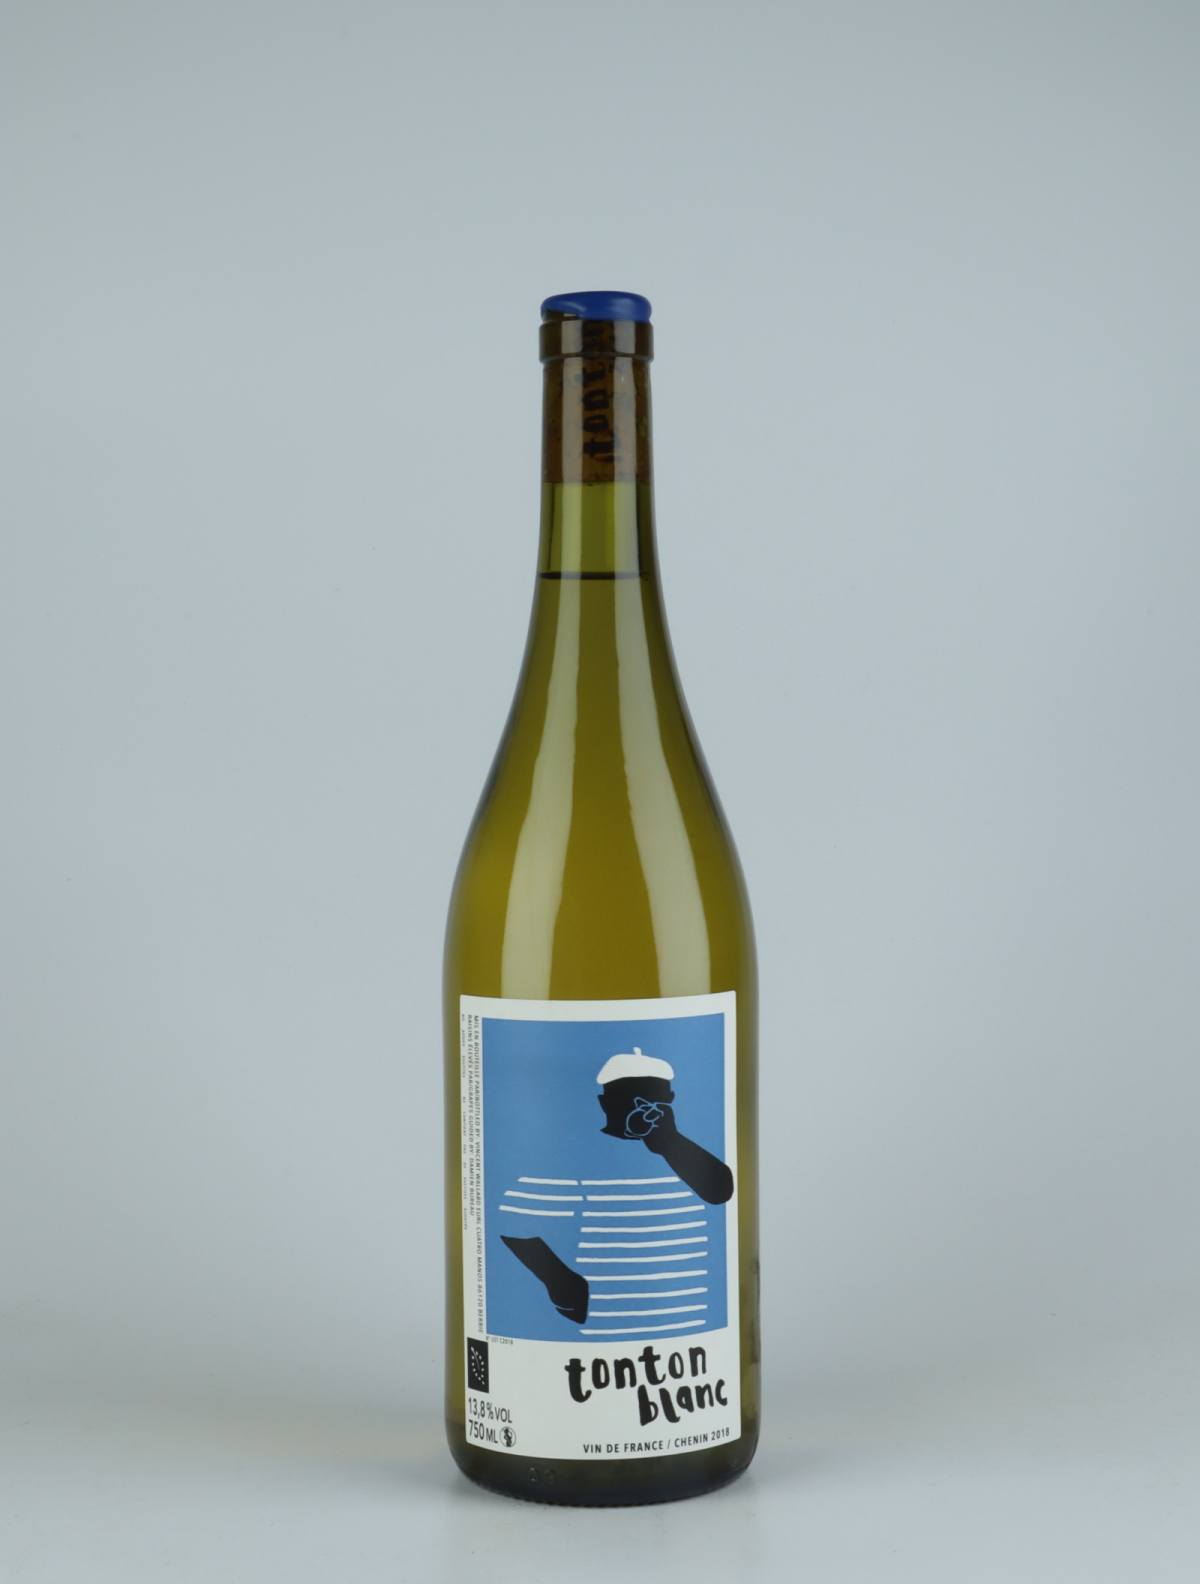 A bottle 2018 Tonton Blanc White wine from Vincent Wallard, Loire in France